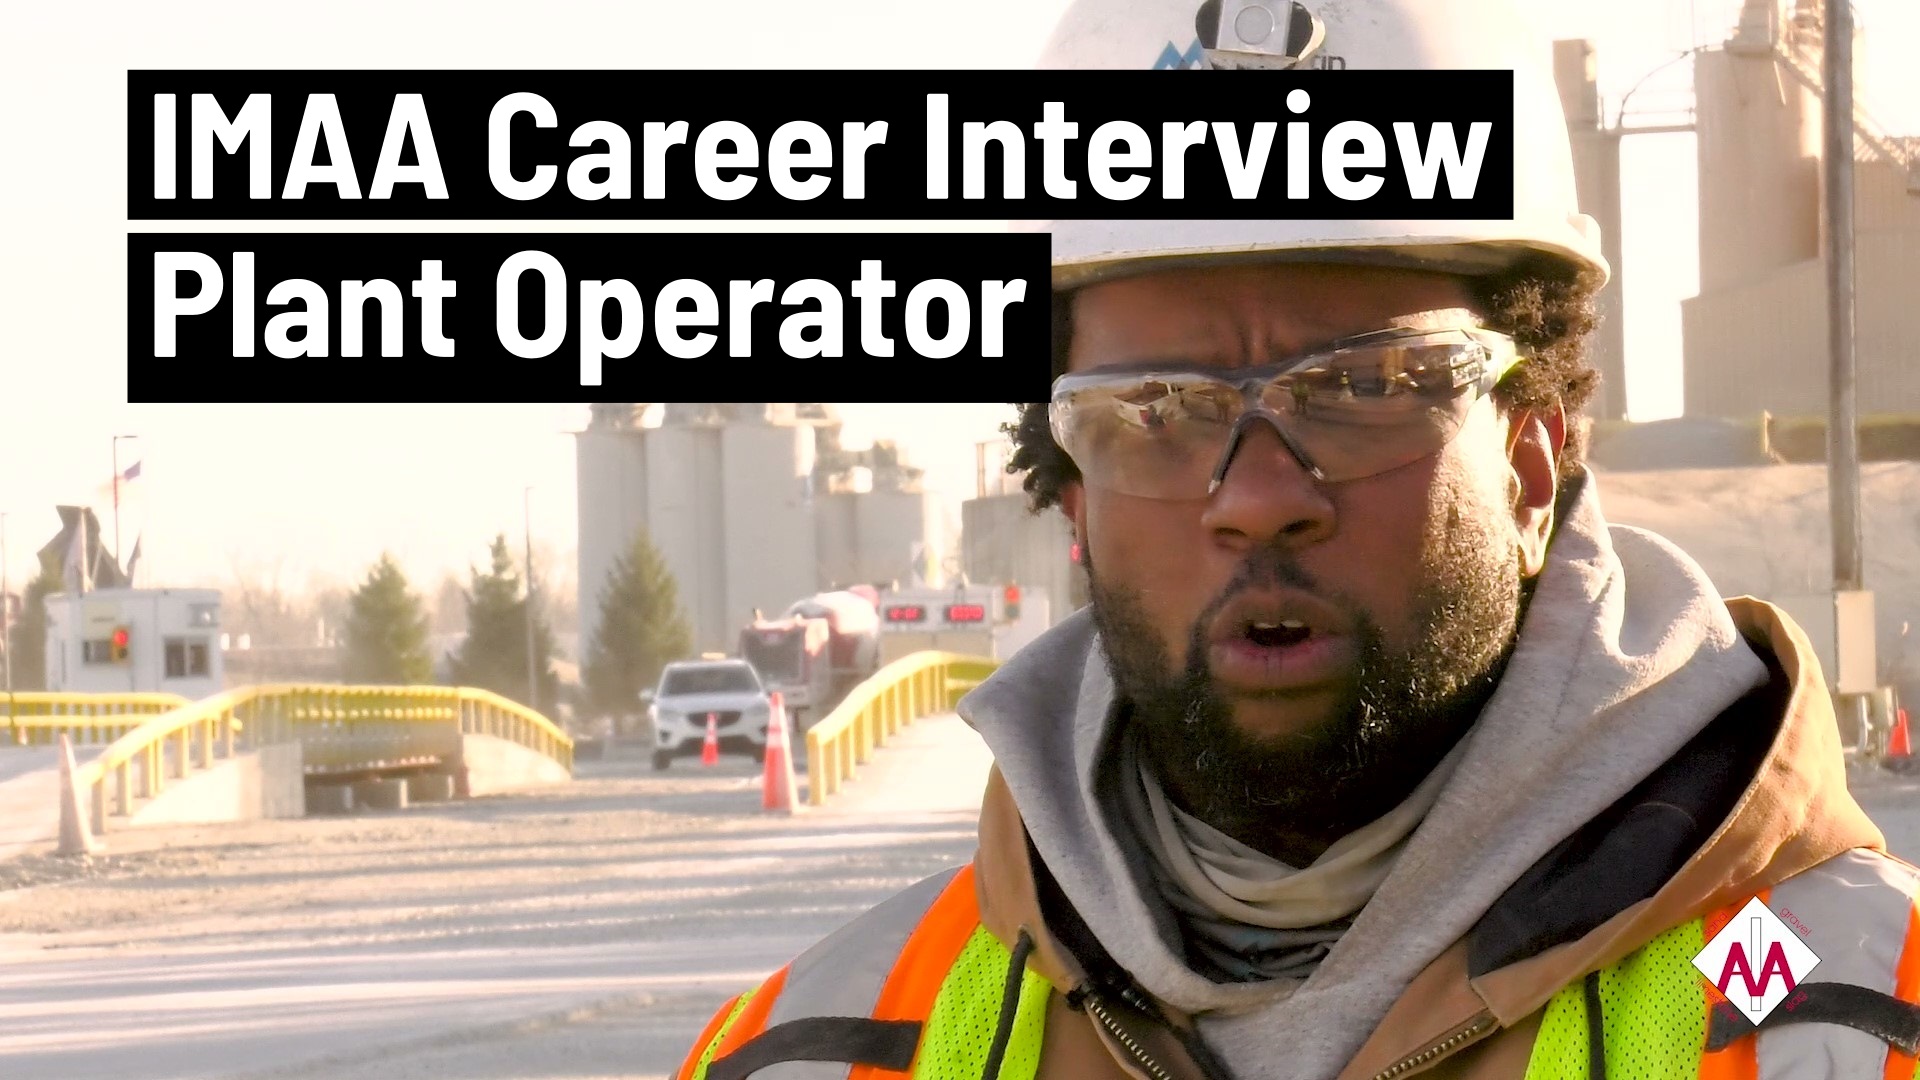 IMAA Career Interview - Plant Operator